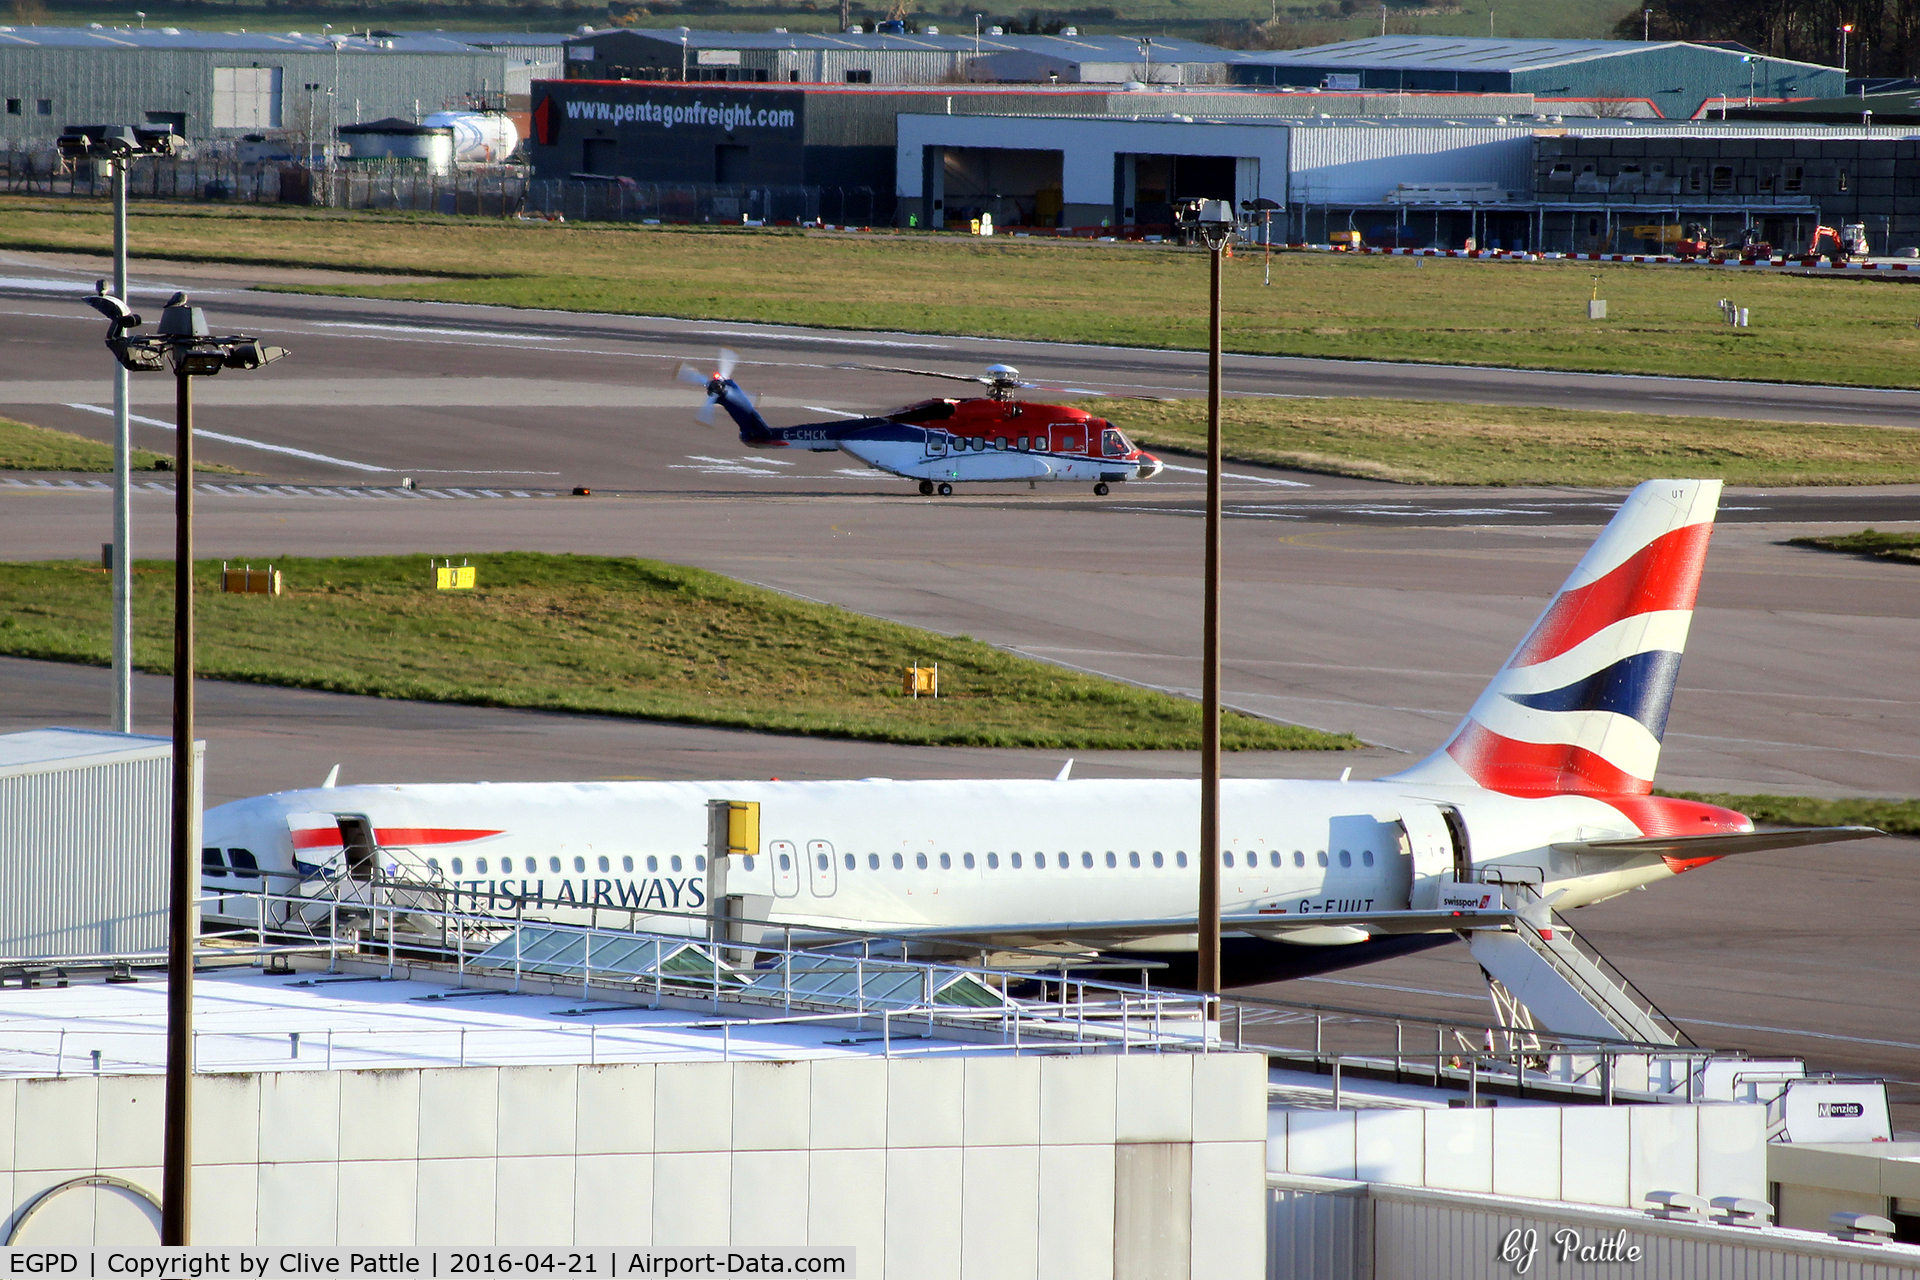 Aberdeen Airport, Aberdeen, Scotland United Kingdom (EGPD) - Aberdeen EGPD terminal looking north